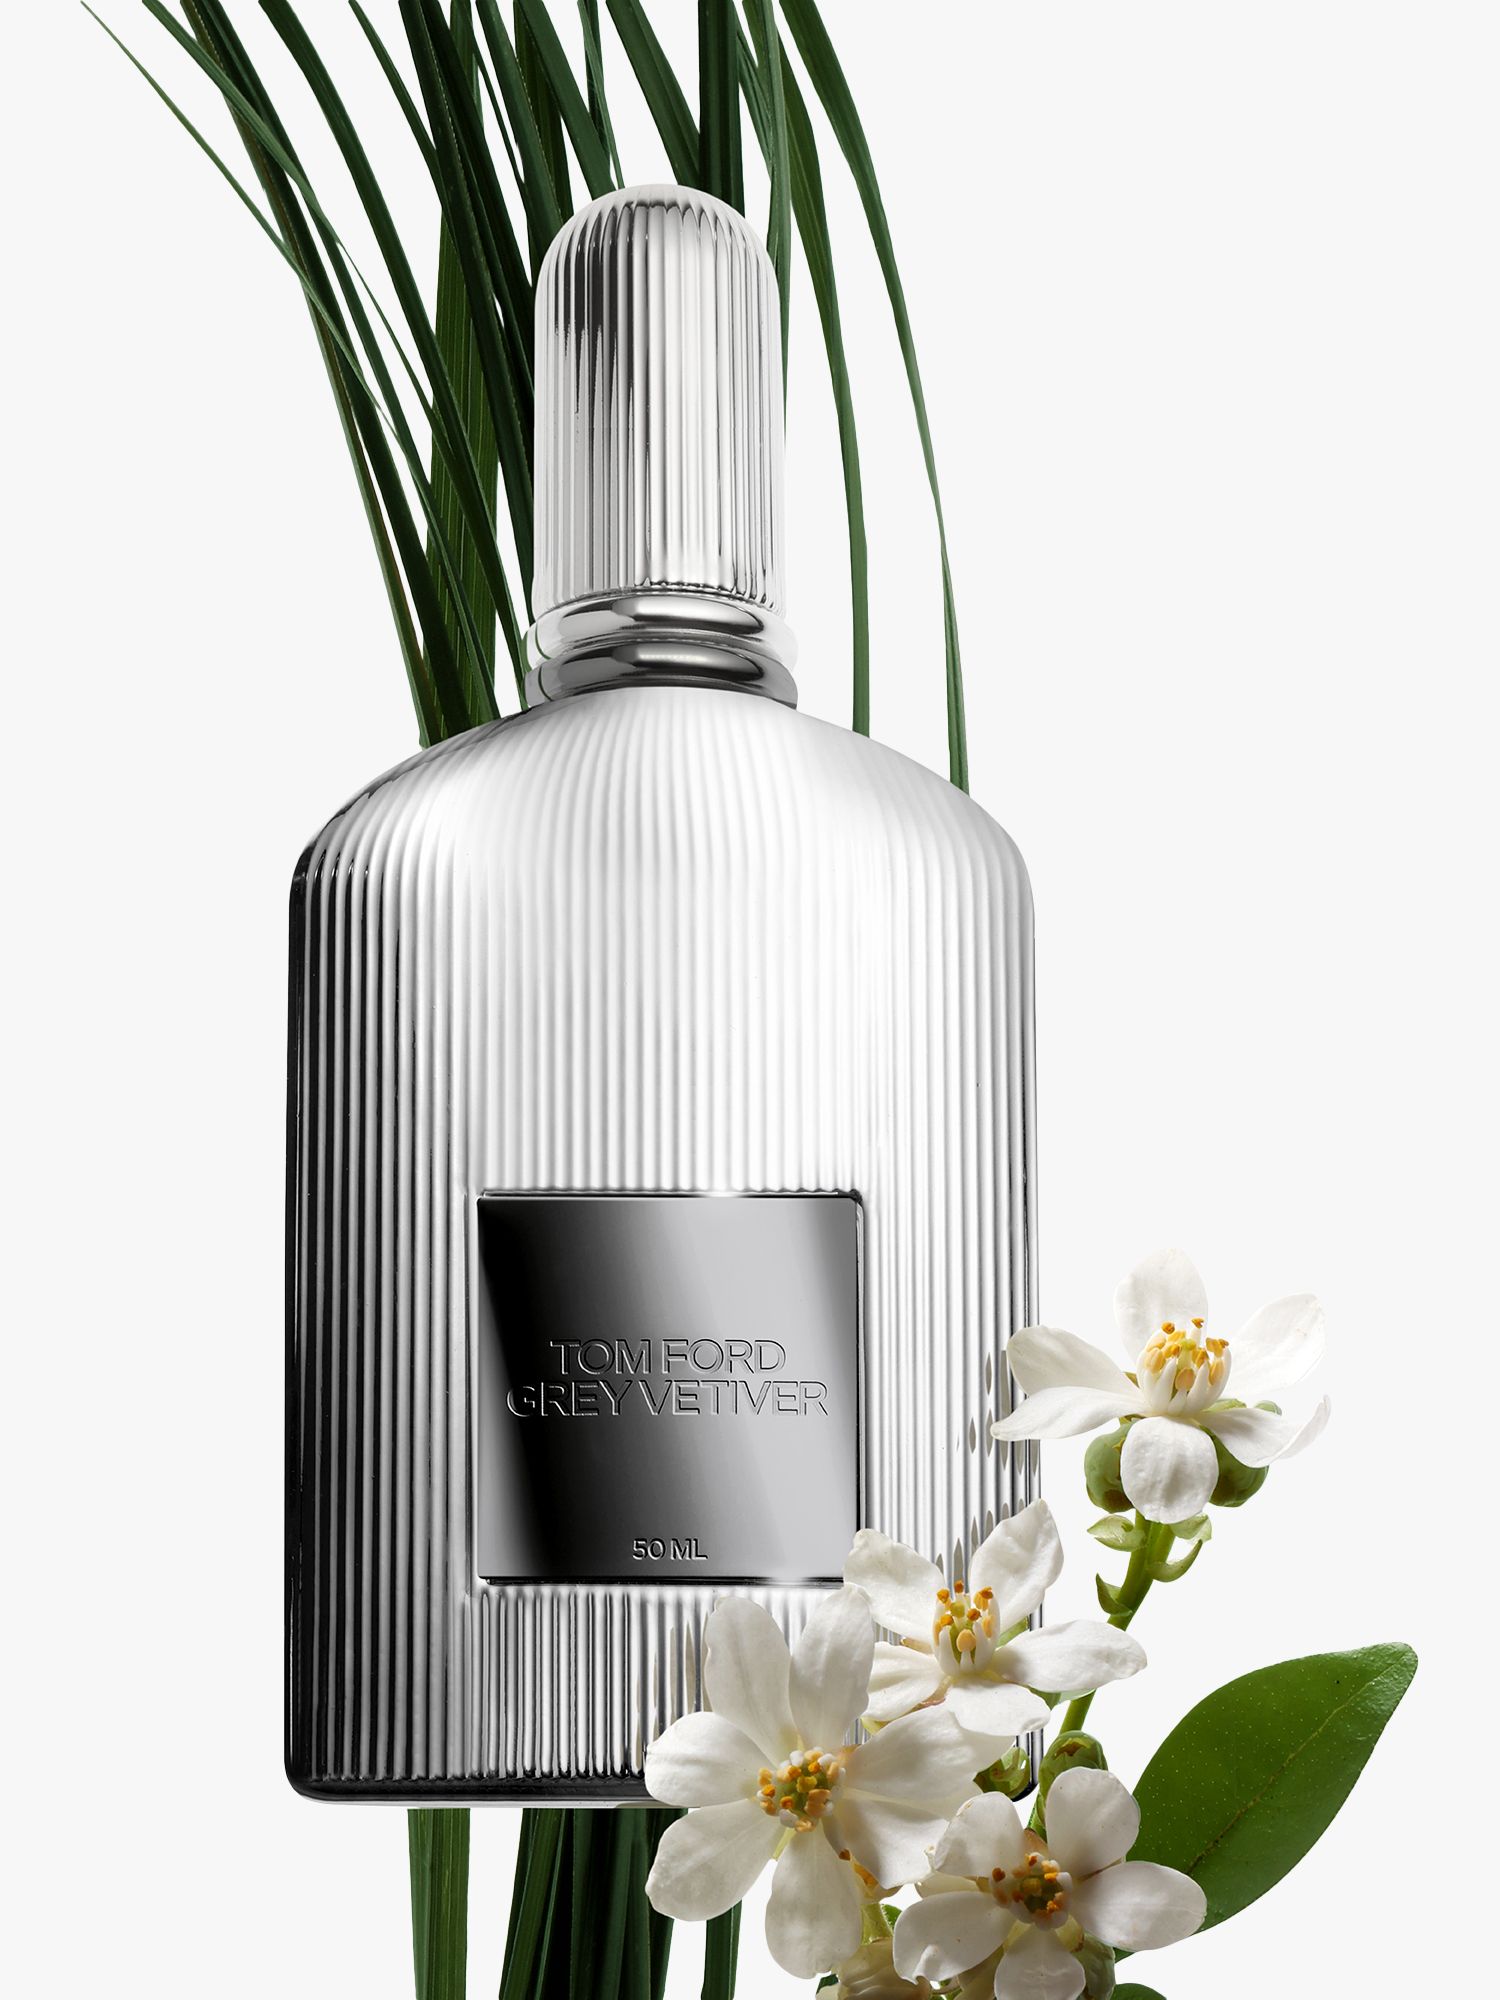 TOM FORD Grey Vetiver Parfum, 50ml